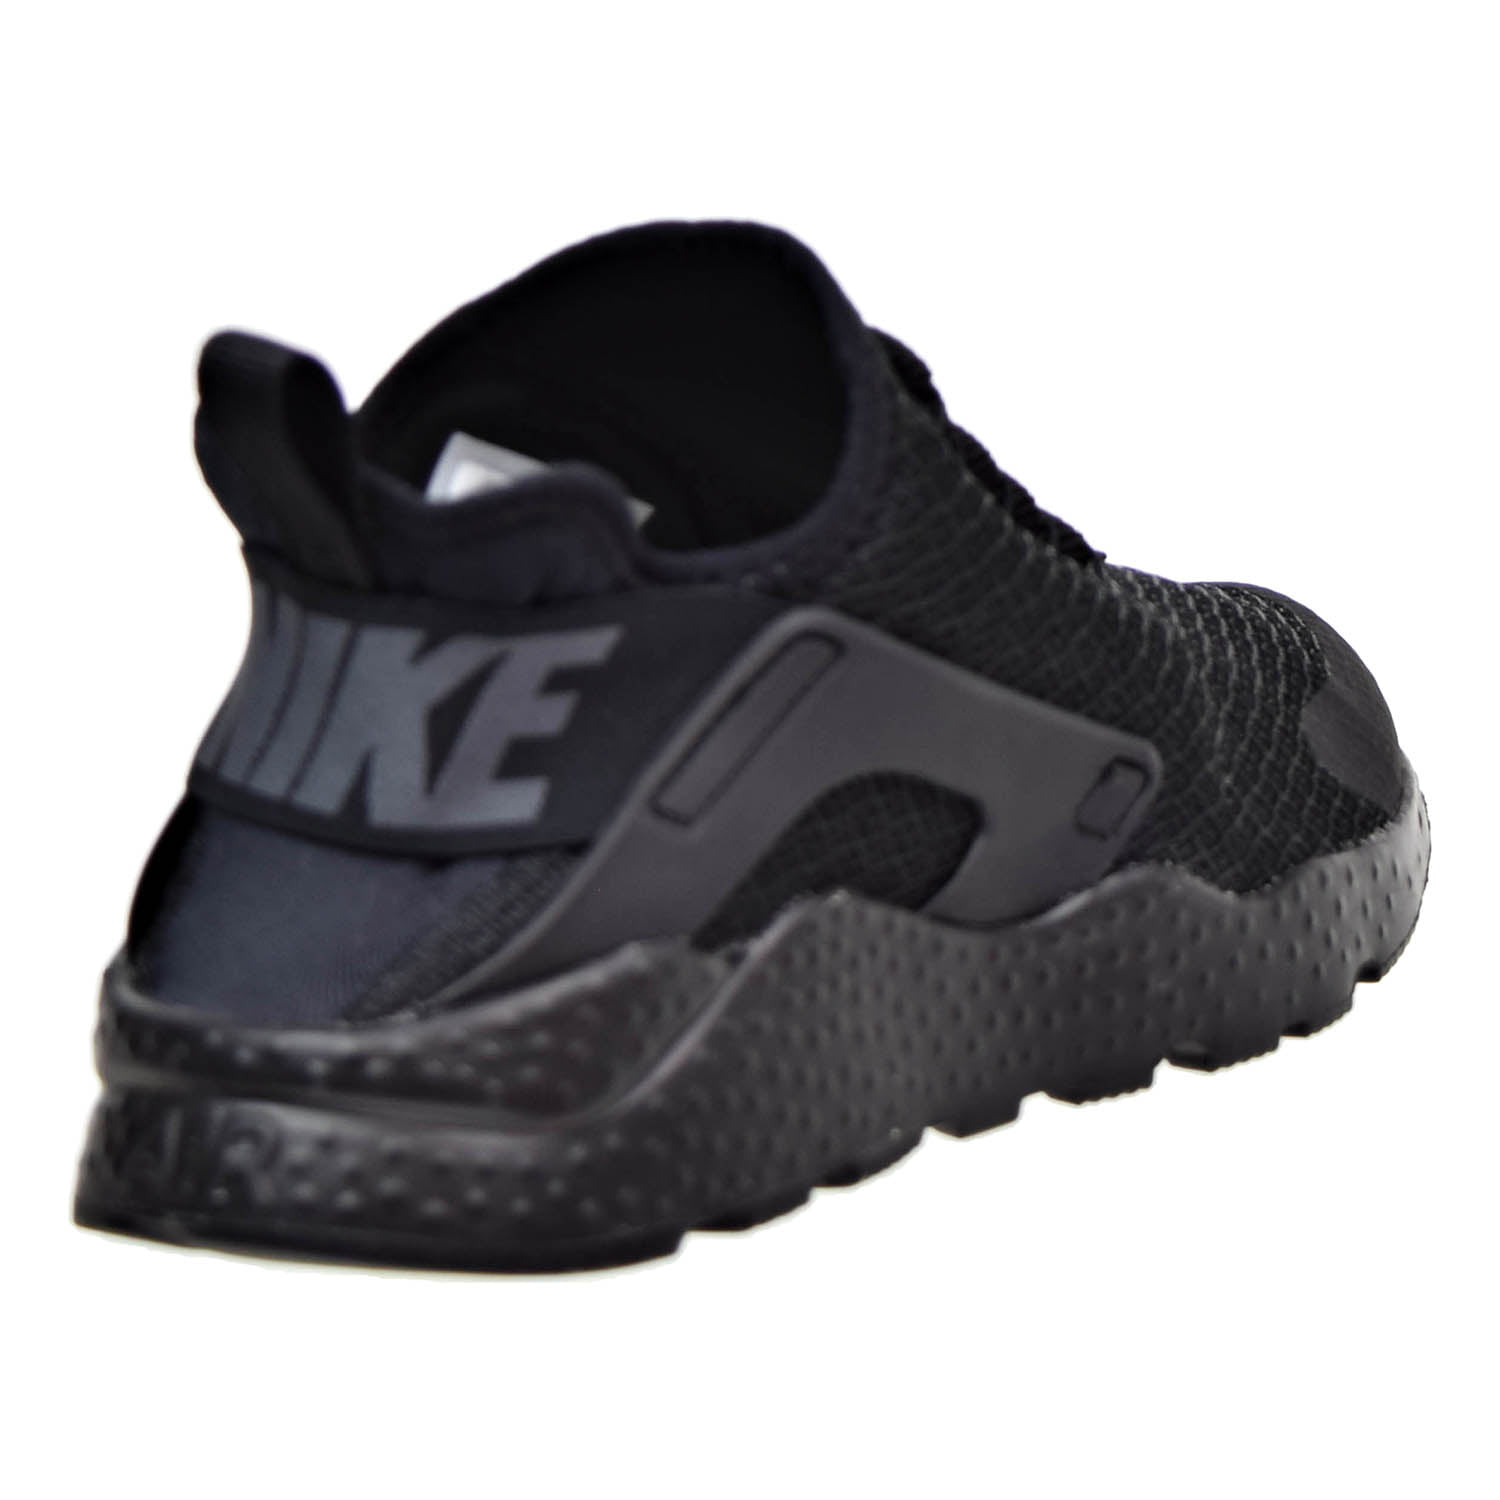 spreker in beroep gaan als je kunt Nike Women's Air Huarache Run Ultra Running Shoe - Walmart.com